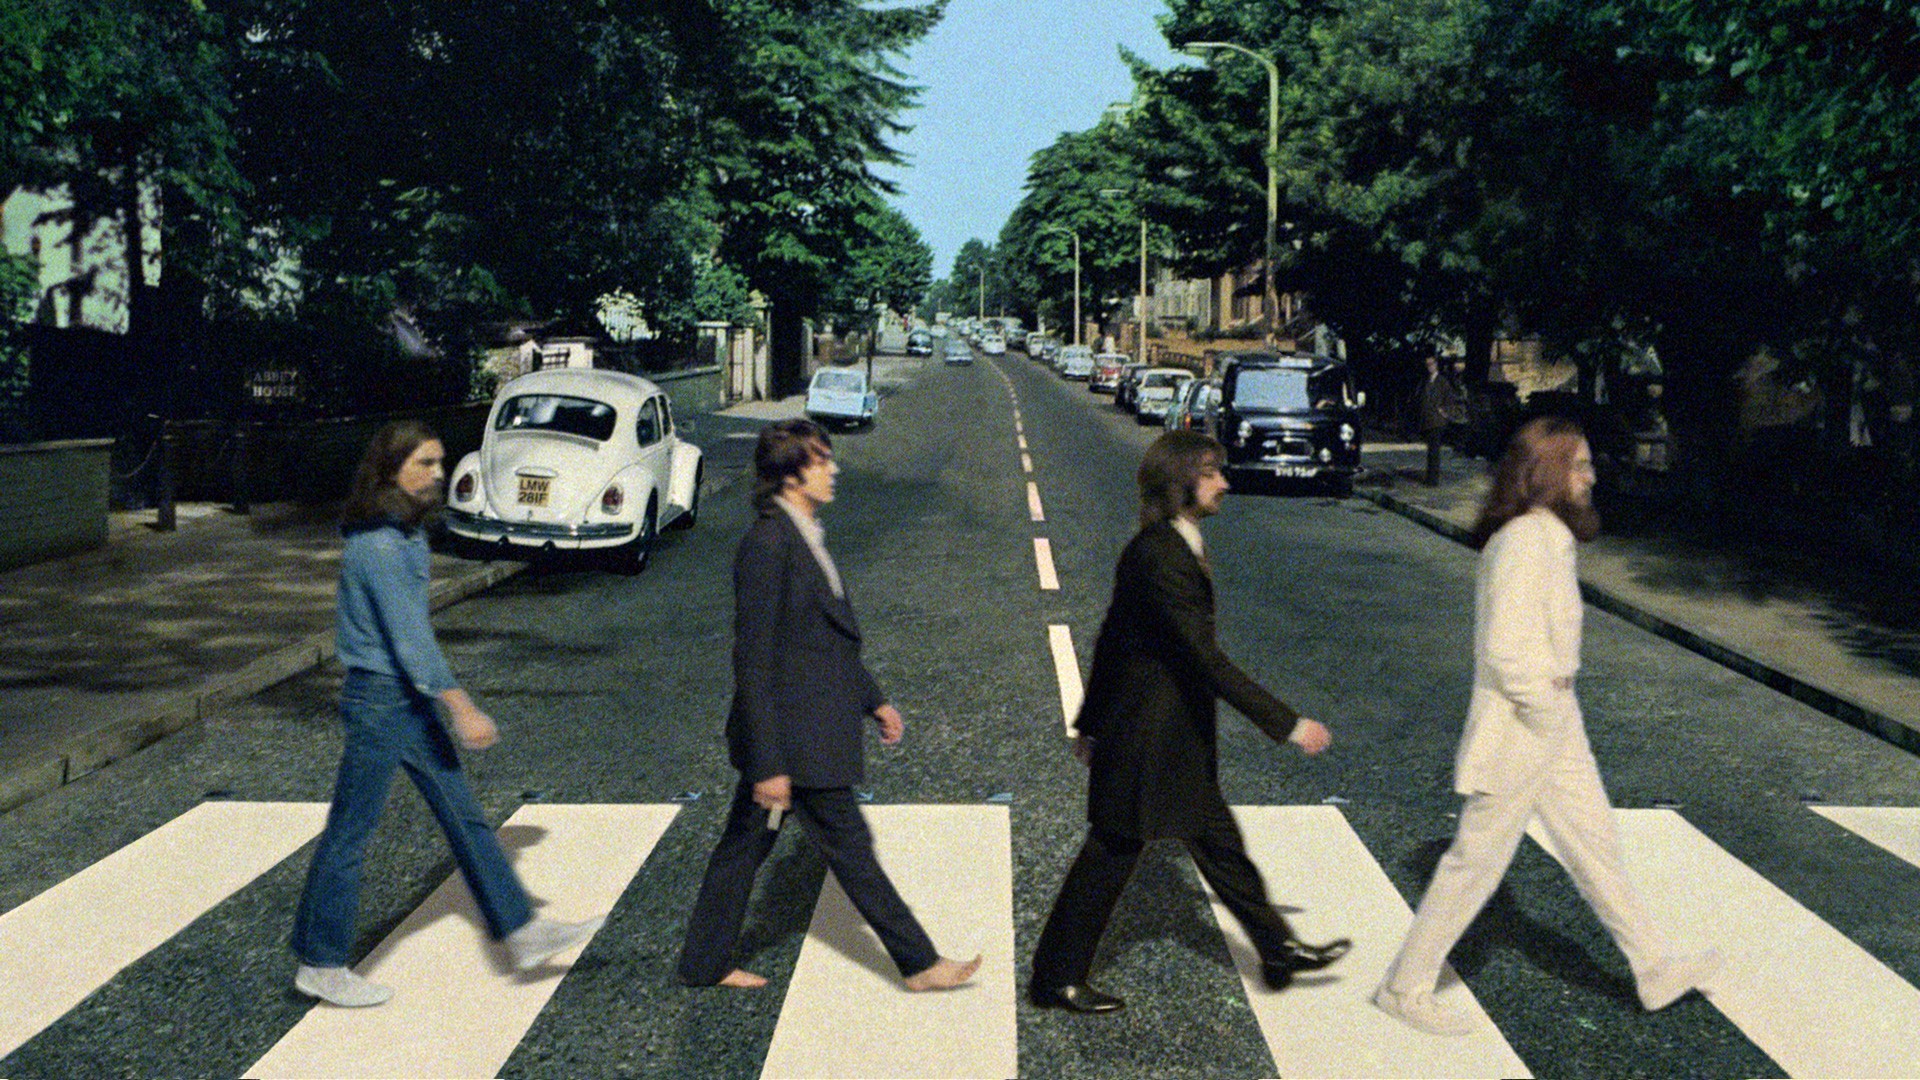 People 1920x1080 music album covers The Beatles Abbey Road George Harrison Ringo Starr John Lennon Paul McCartney street men